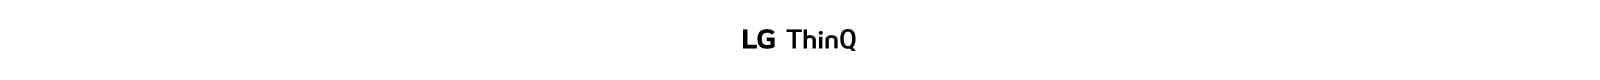 Logo de LG ThinQ